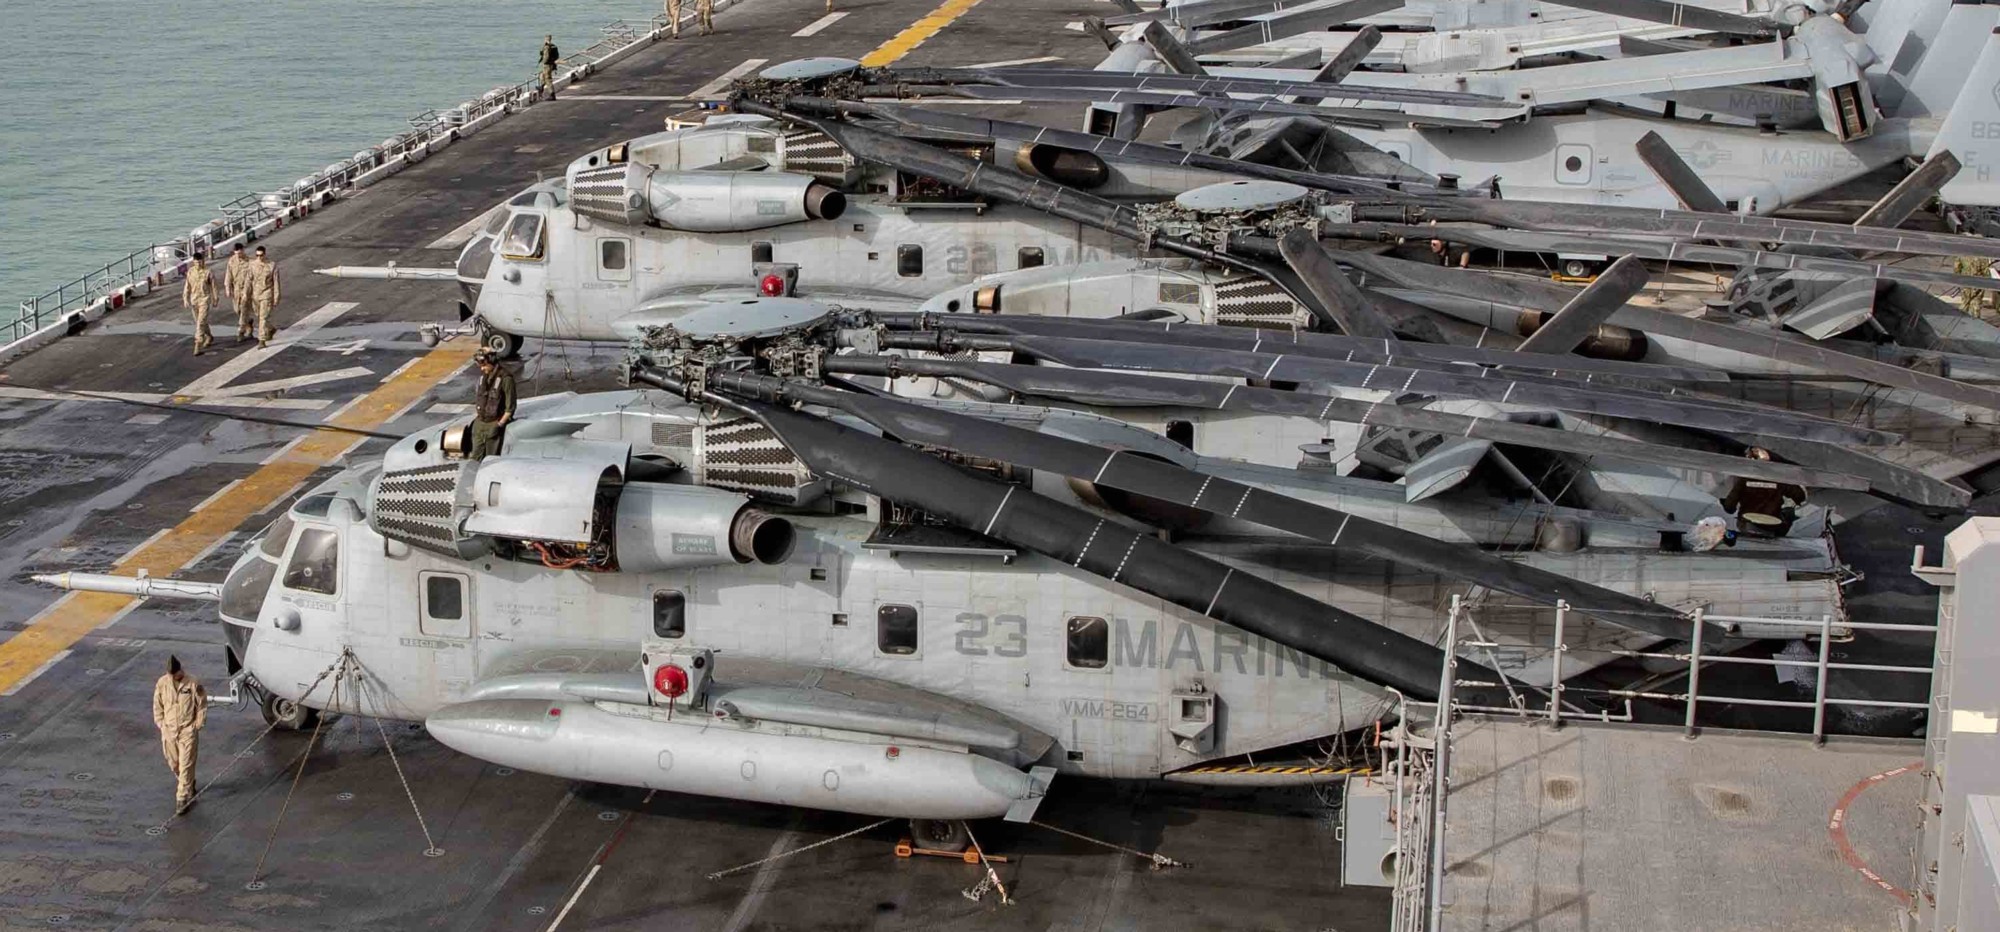 hmh-366 hammerheads ch-53e super stallion marine heavy helicopter squadron usmc 143